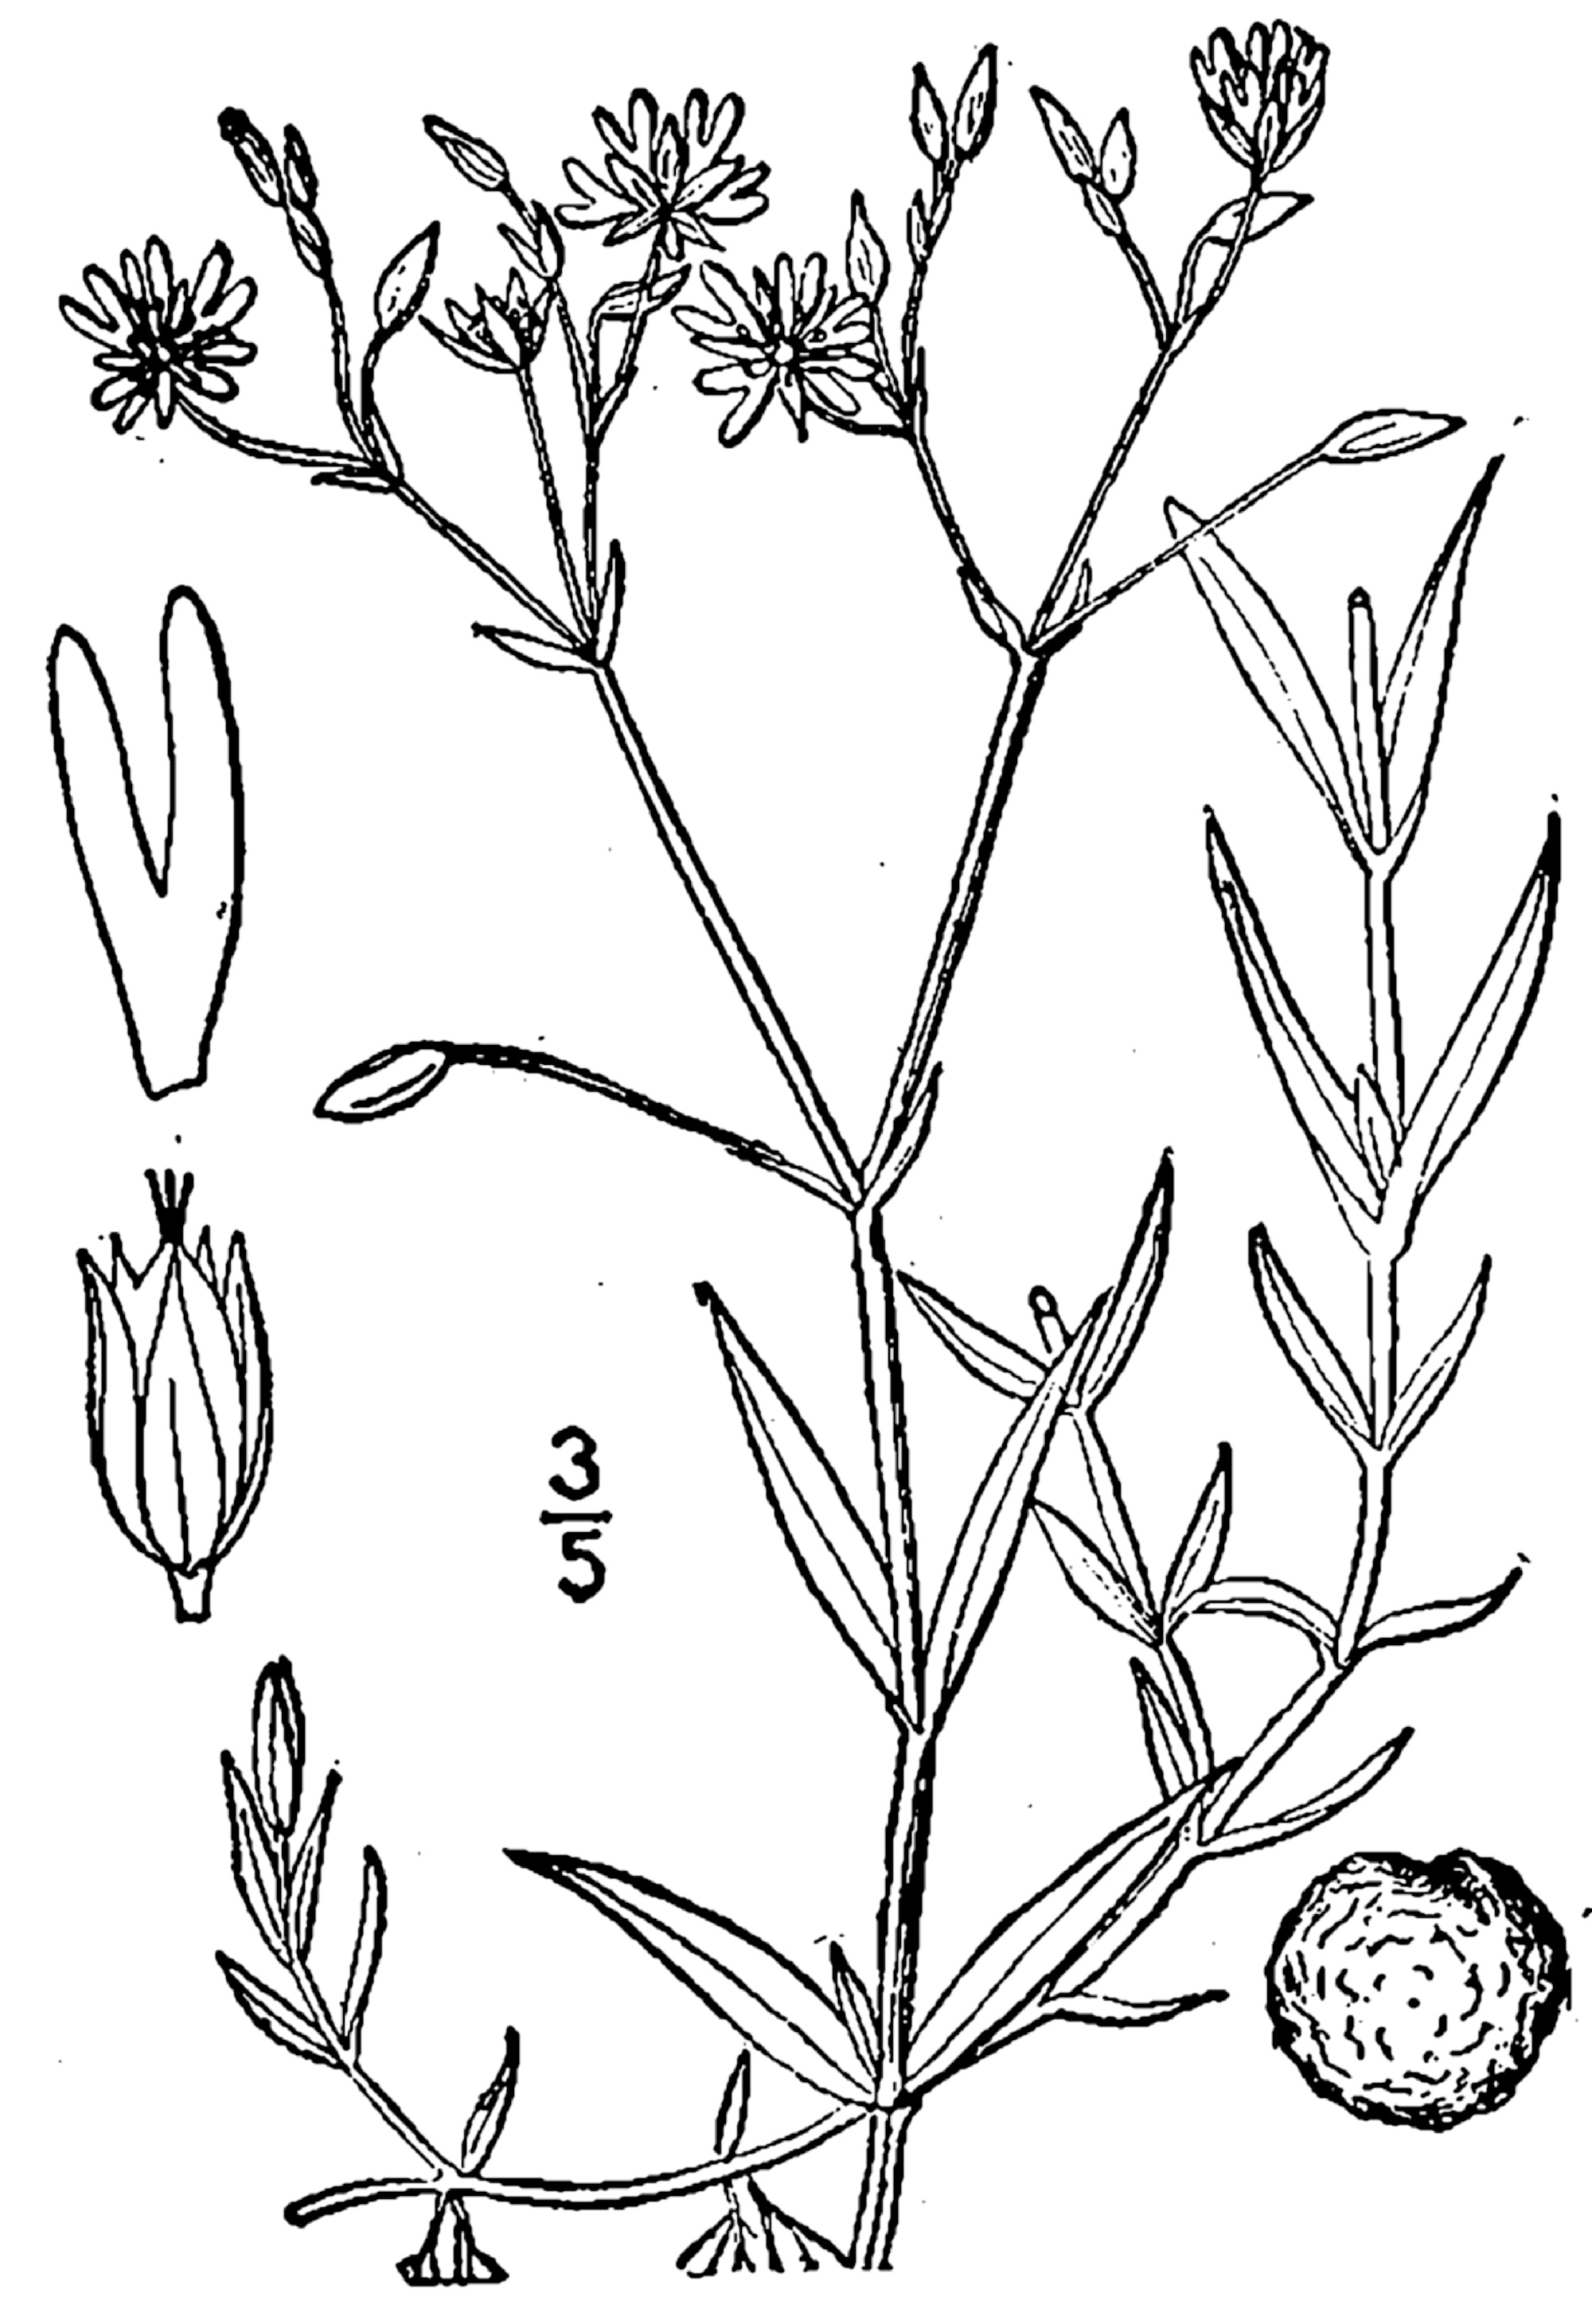 1913 Stellaria graminea botanical illustration.